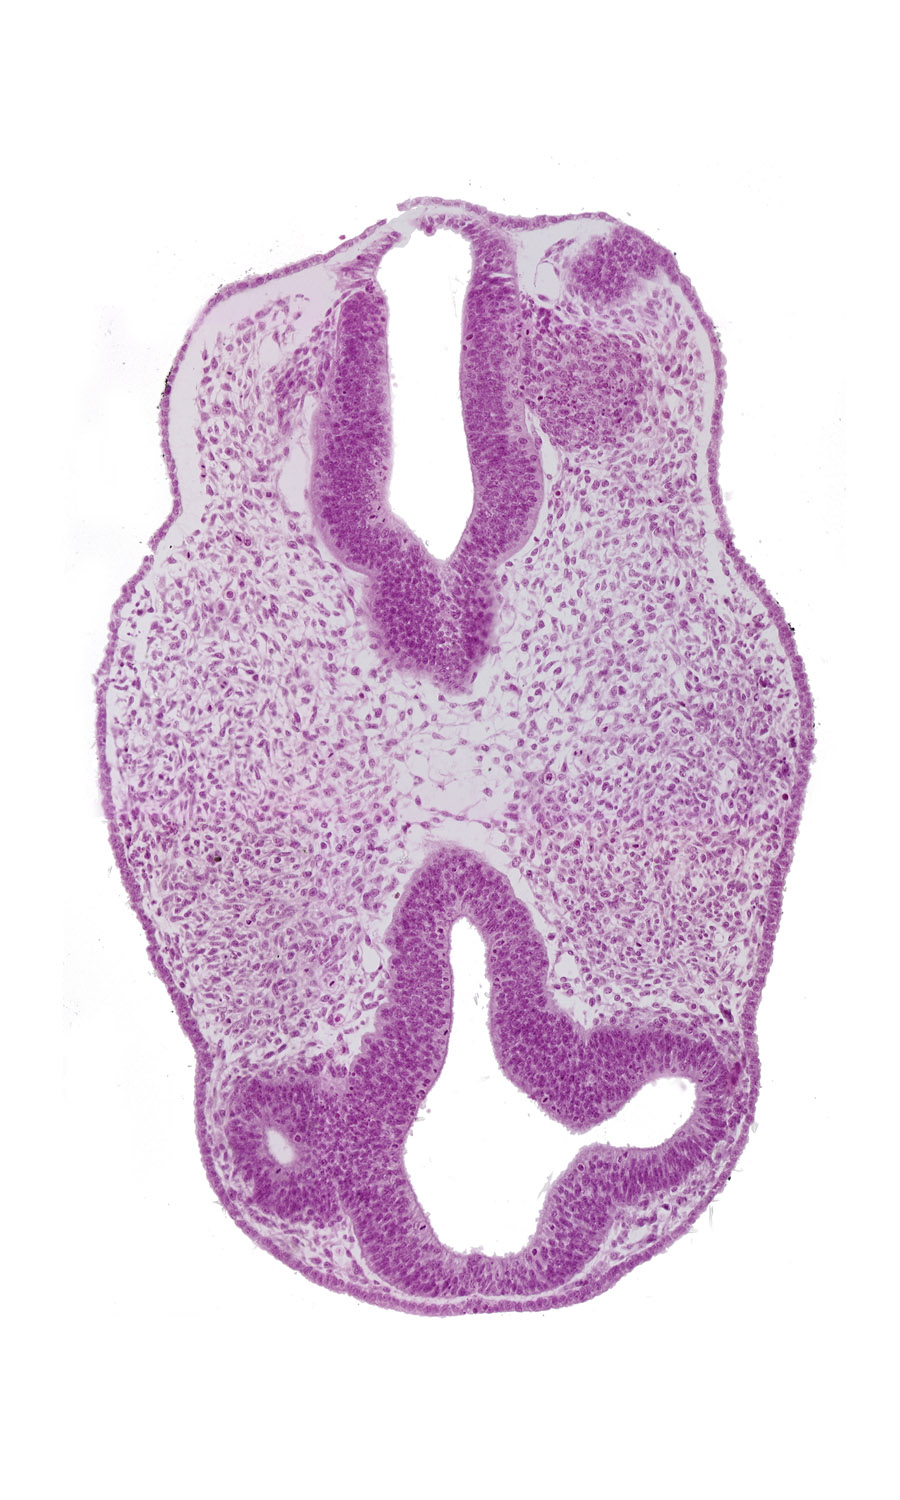 cephalic edge of otic vesicle, diencephalon (D1), diencephalon (D2), facio-vestibulocochlear neural crest (CN VII and CN VIII), intraretinal space (optic vesicle cavity), presumptive optic stalk (CN II), region of mesencephalic (cephalic) flexure, rhombencephalon (Rh. 3), rhombencephalon (Rh. 4), roof plate, venous plexus(es)